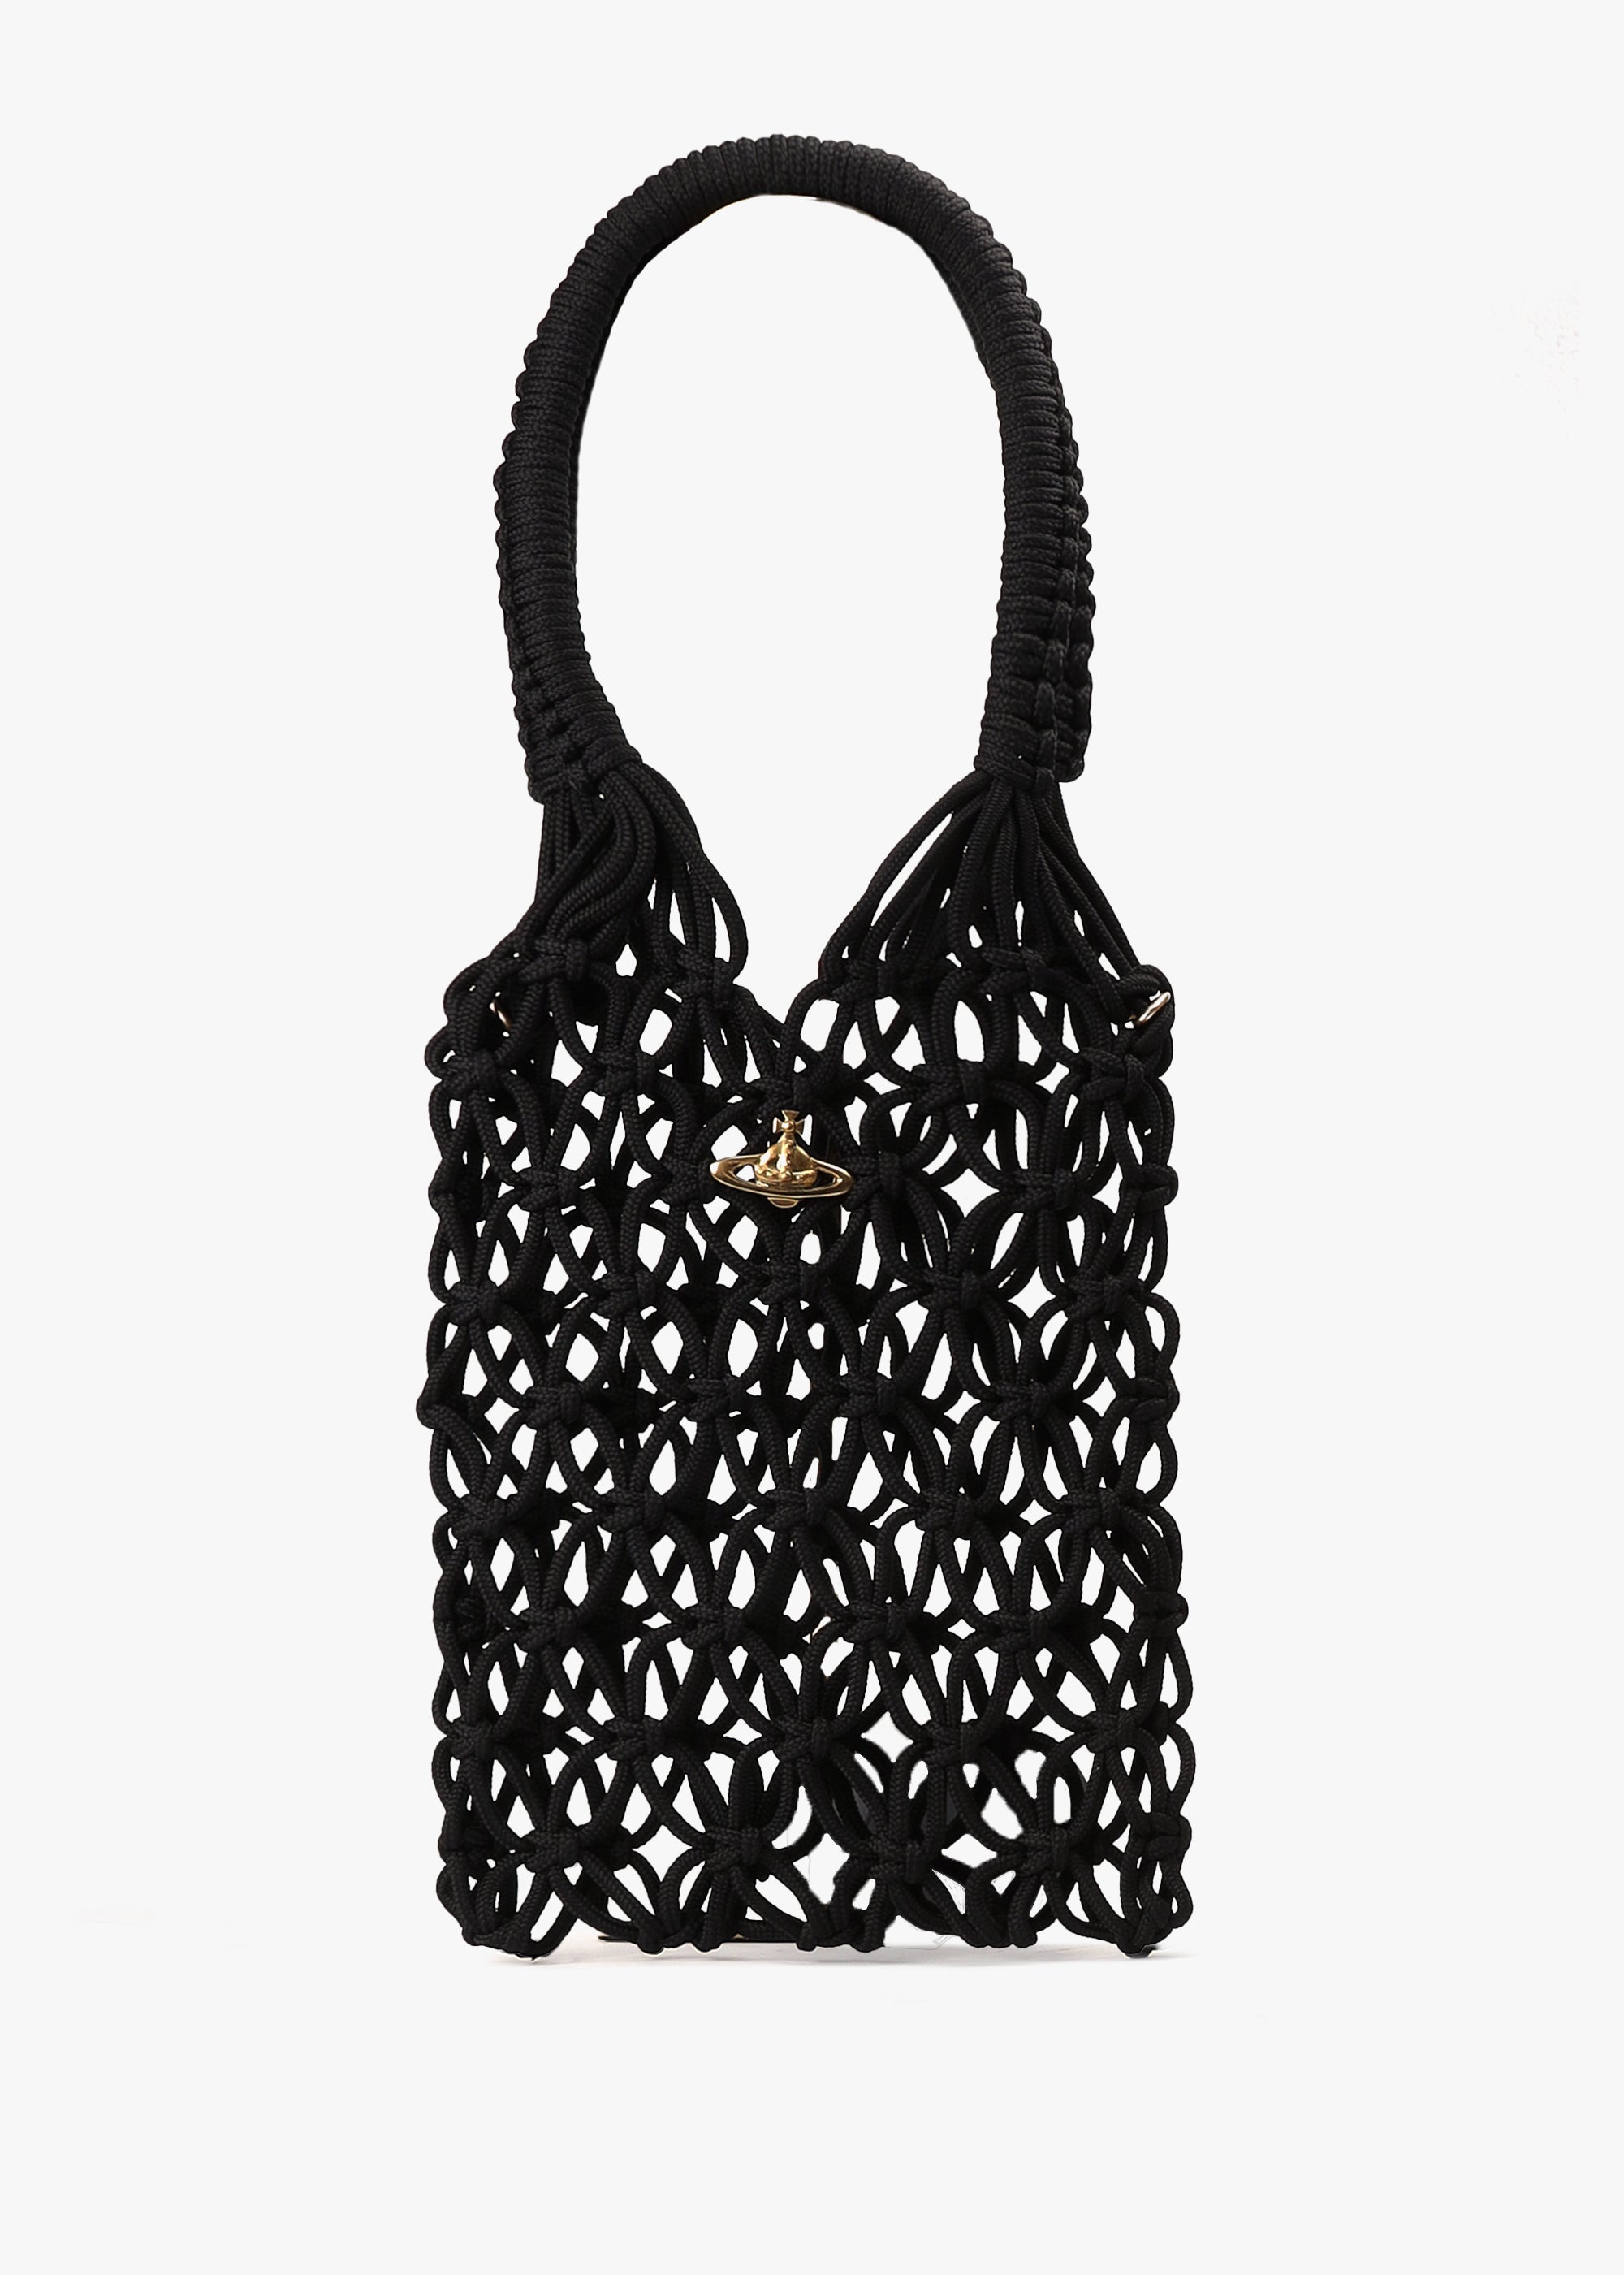 Image of Vivienne Westwood Women's Large Macrame Black Tote Bag